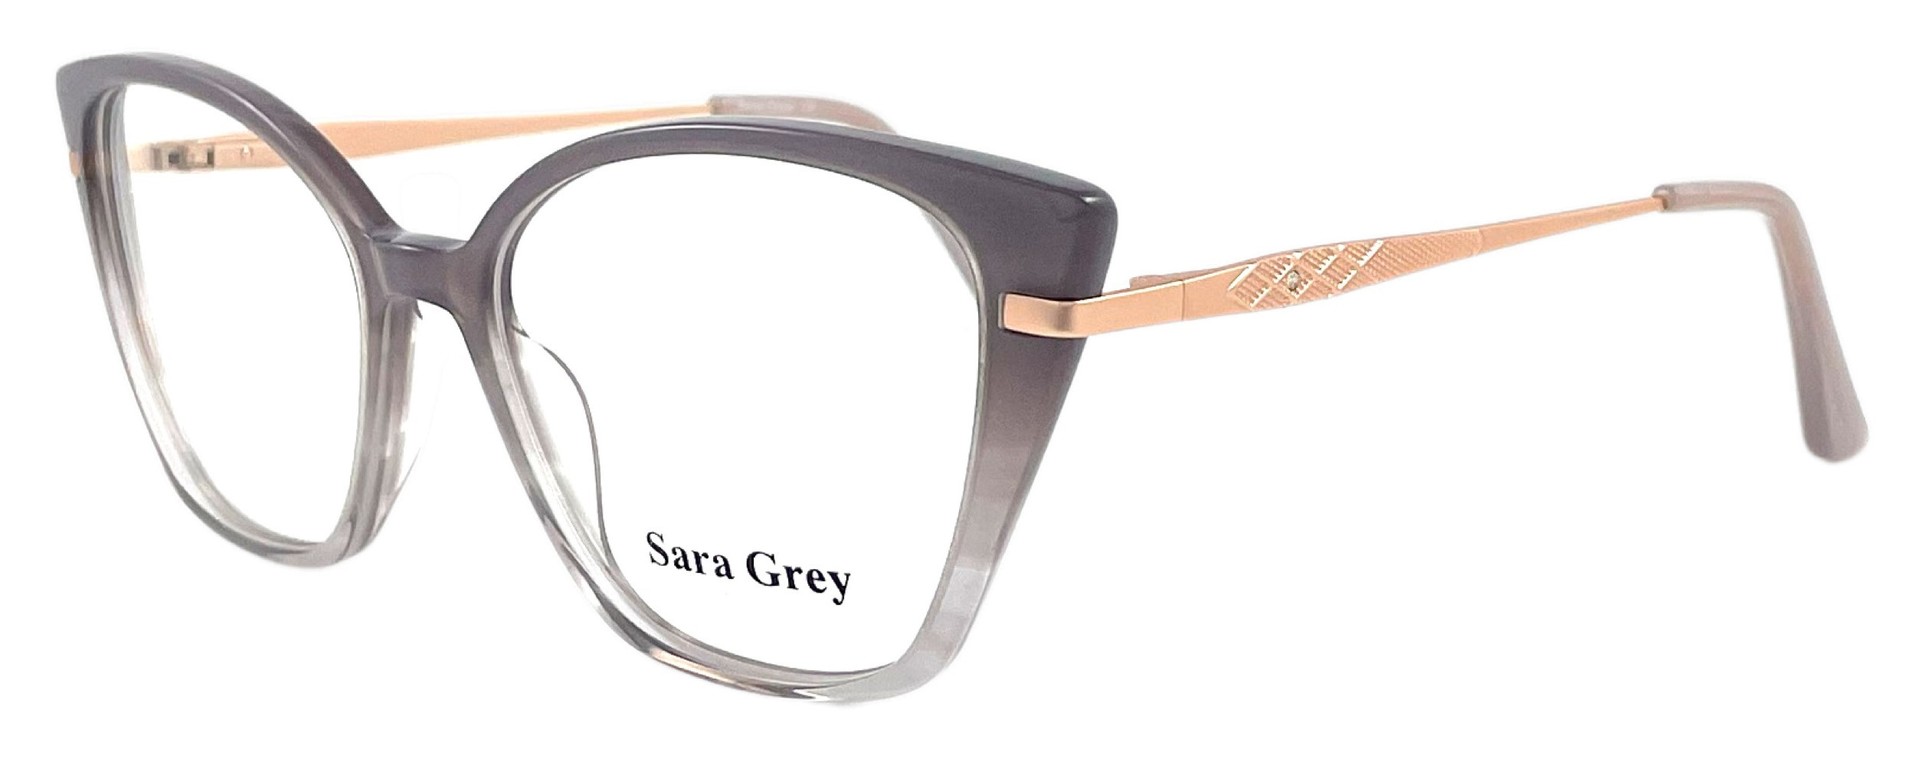 Sara Grey MG6188 C5 2